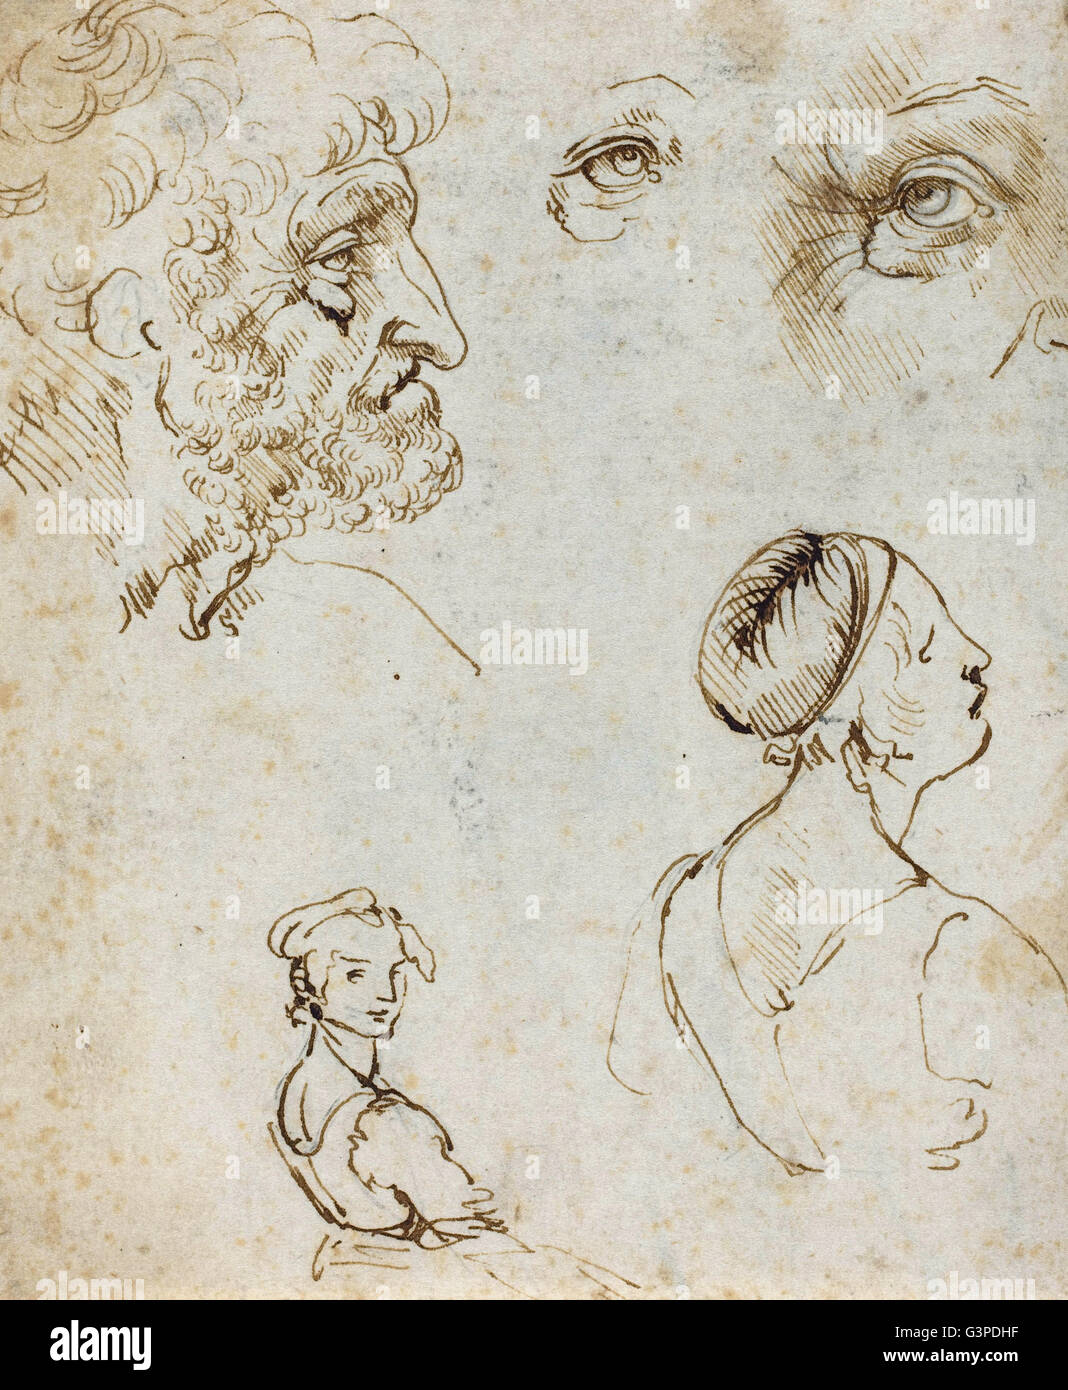 Leonardo da Vinci - Sheet of Studies (recto) - National Gallery of Art, Washington DC Stock Photo